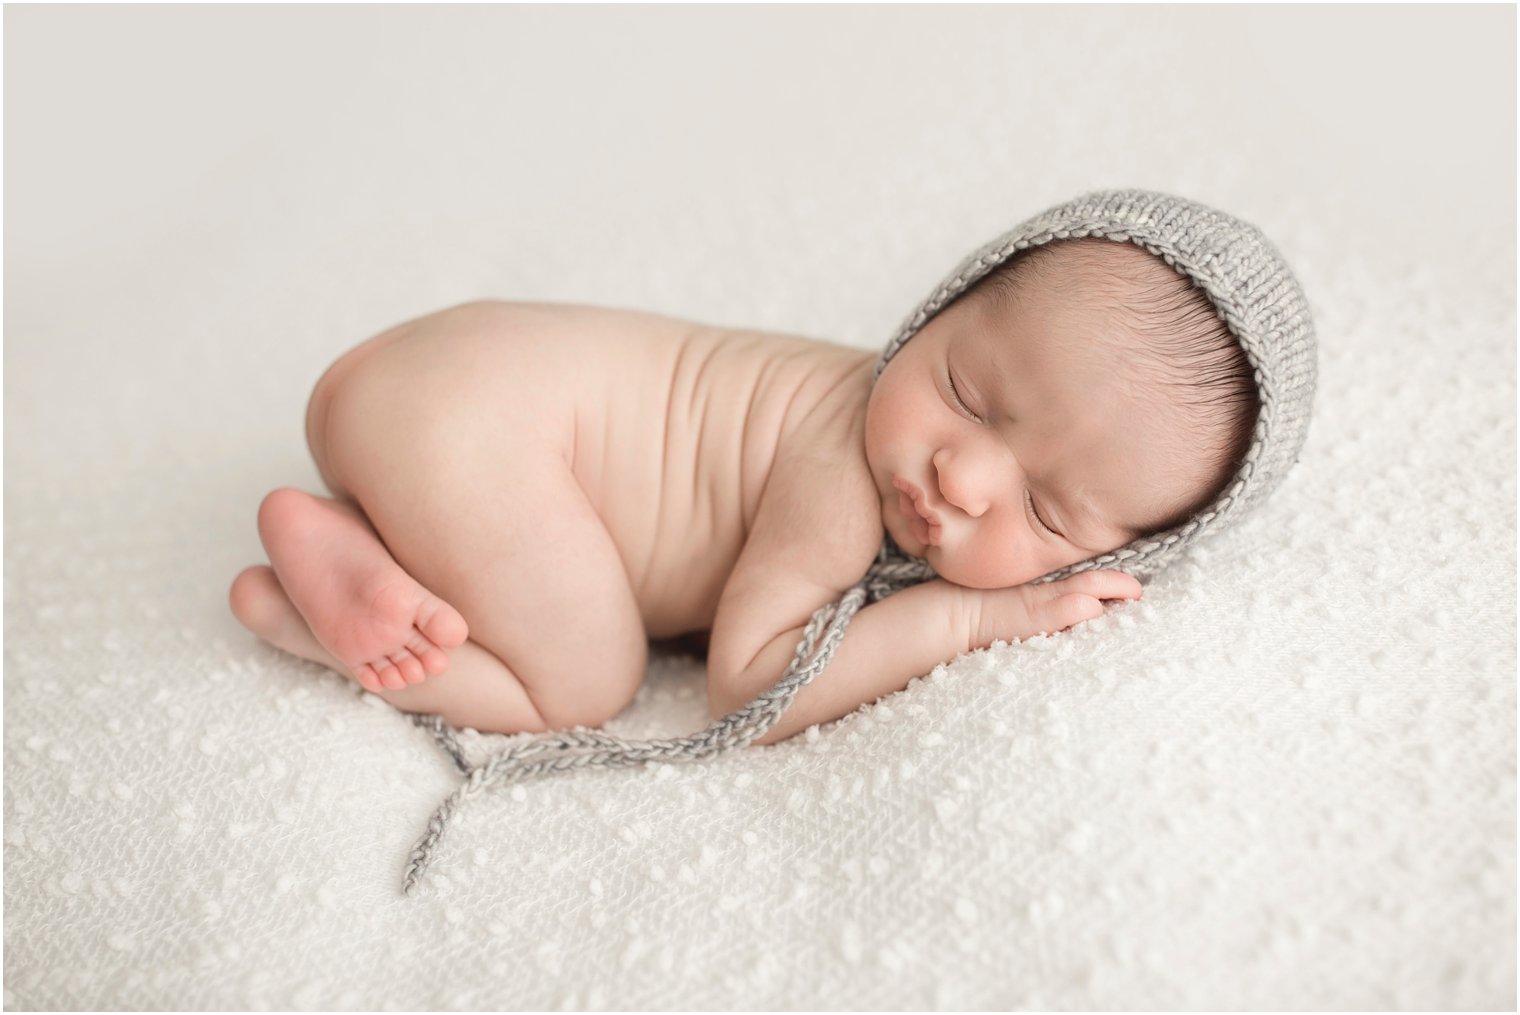 Newborn boy with gray knit hat